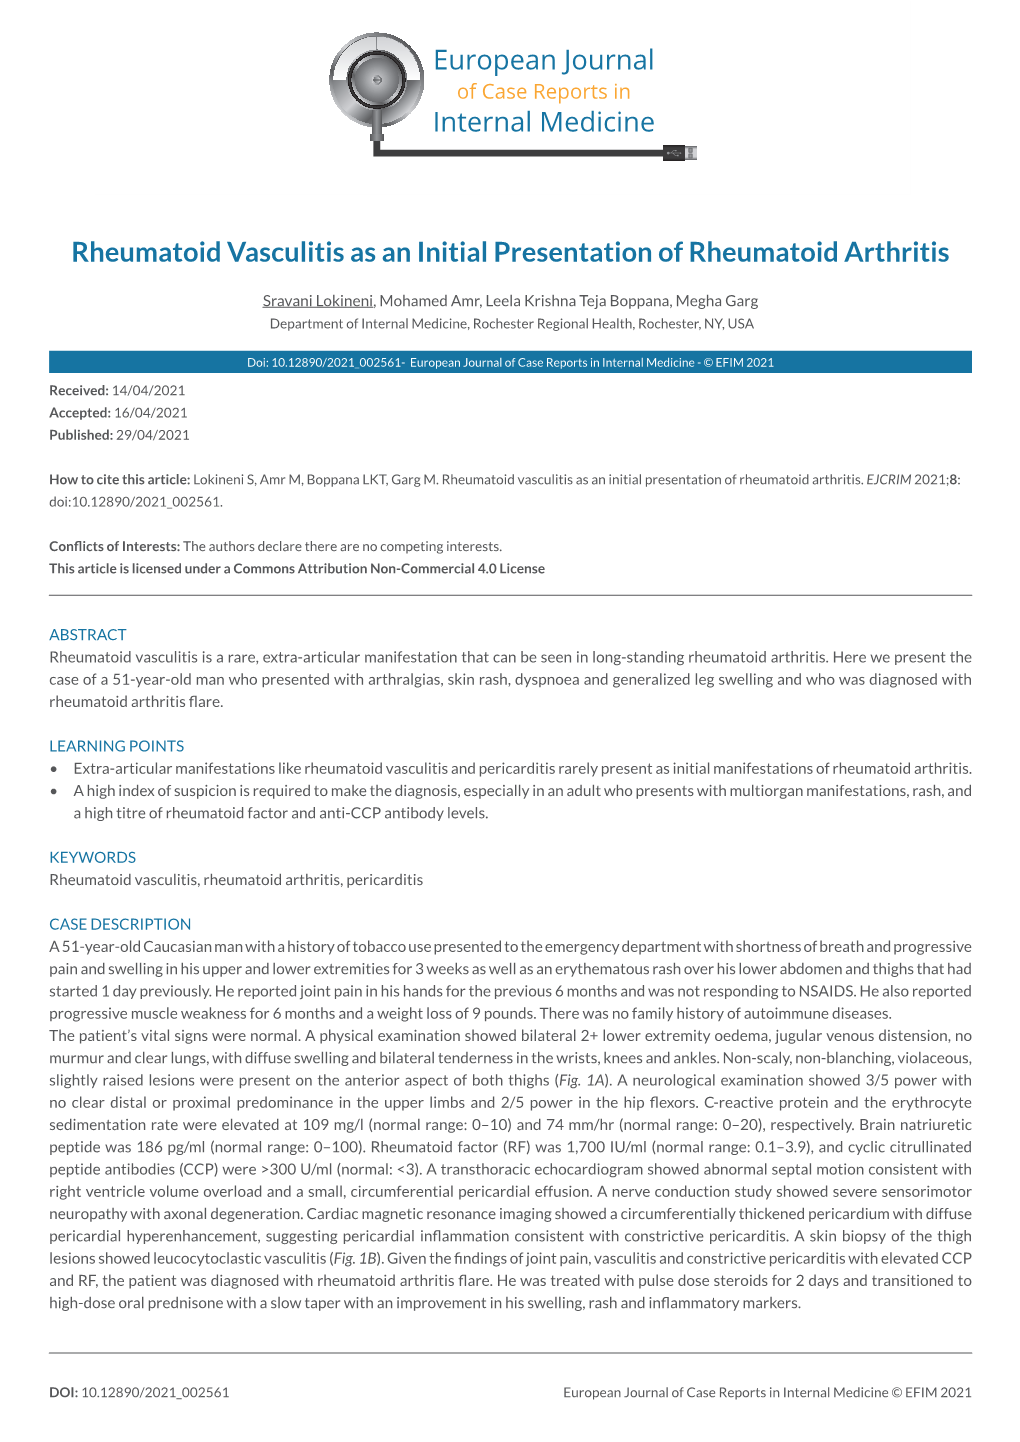 Rheumatoid Vasculitis As an Initial Presentation of Rheumatoid Arthritis